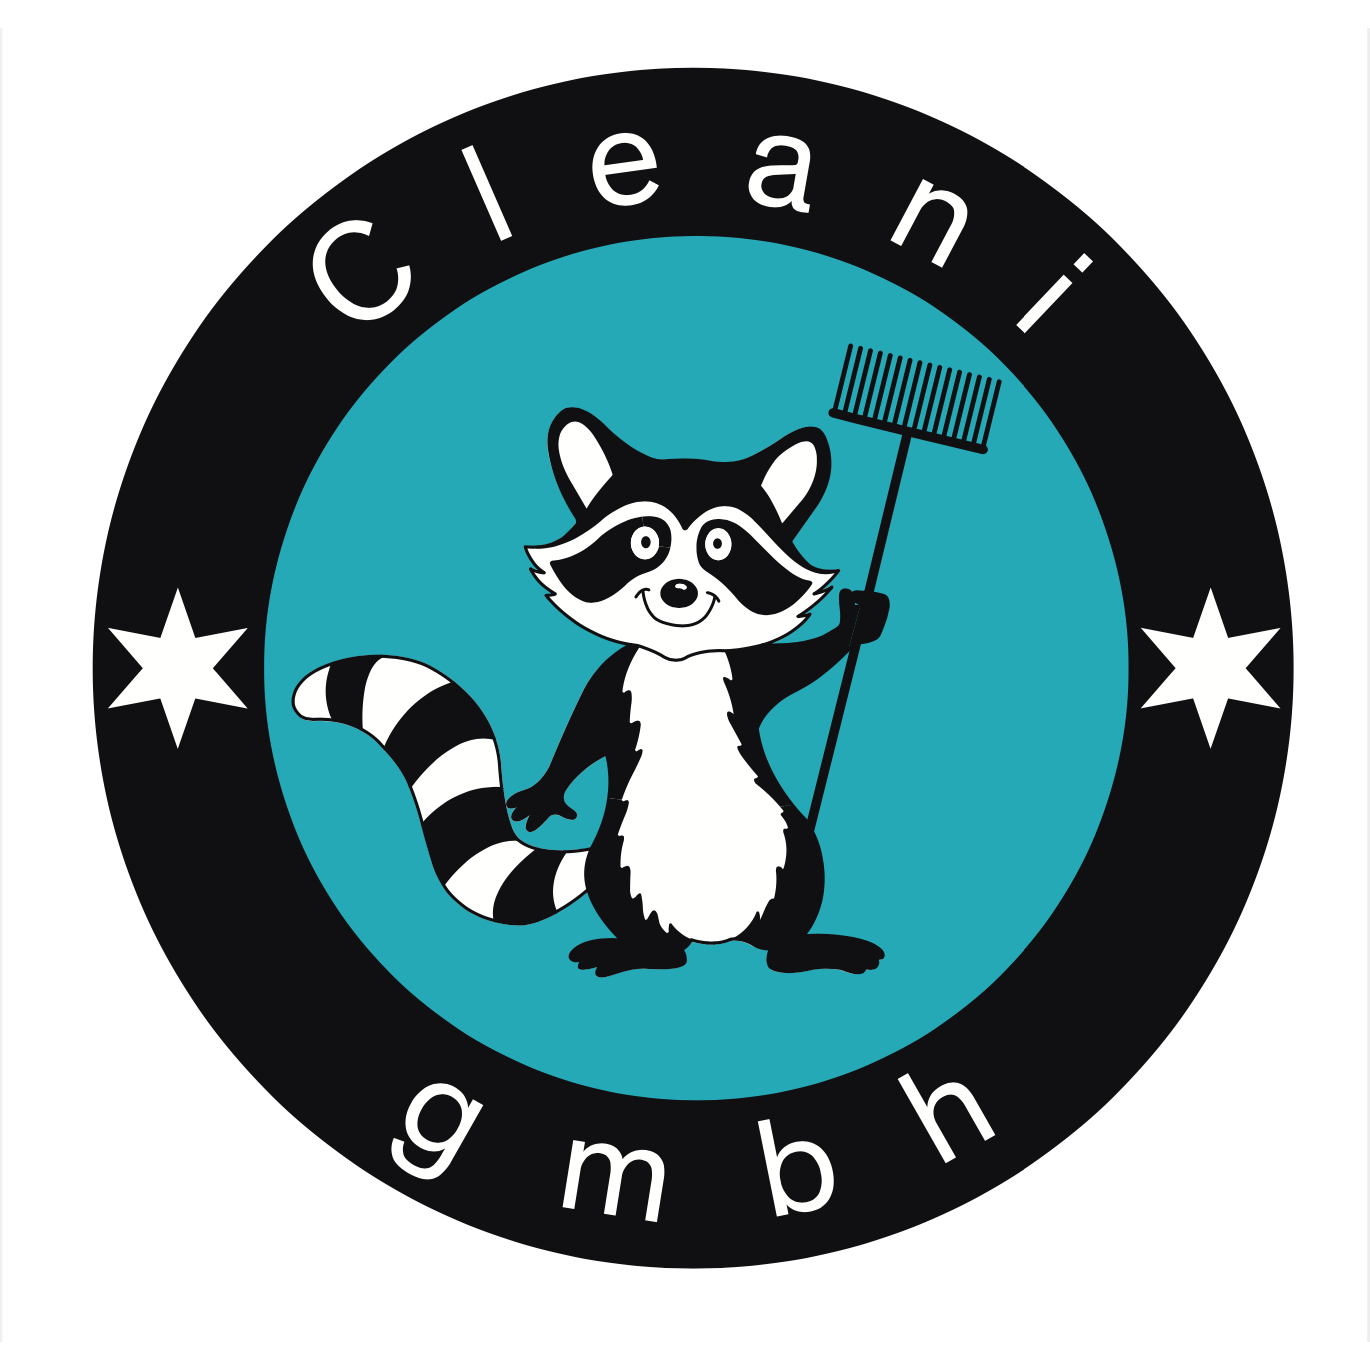 cleani gmbh Logo